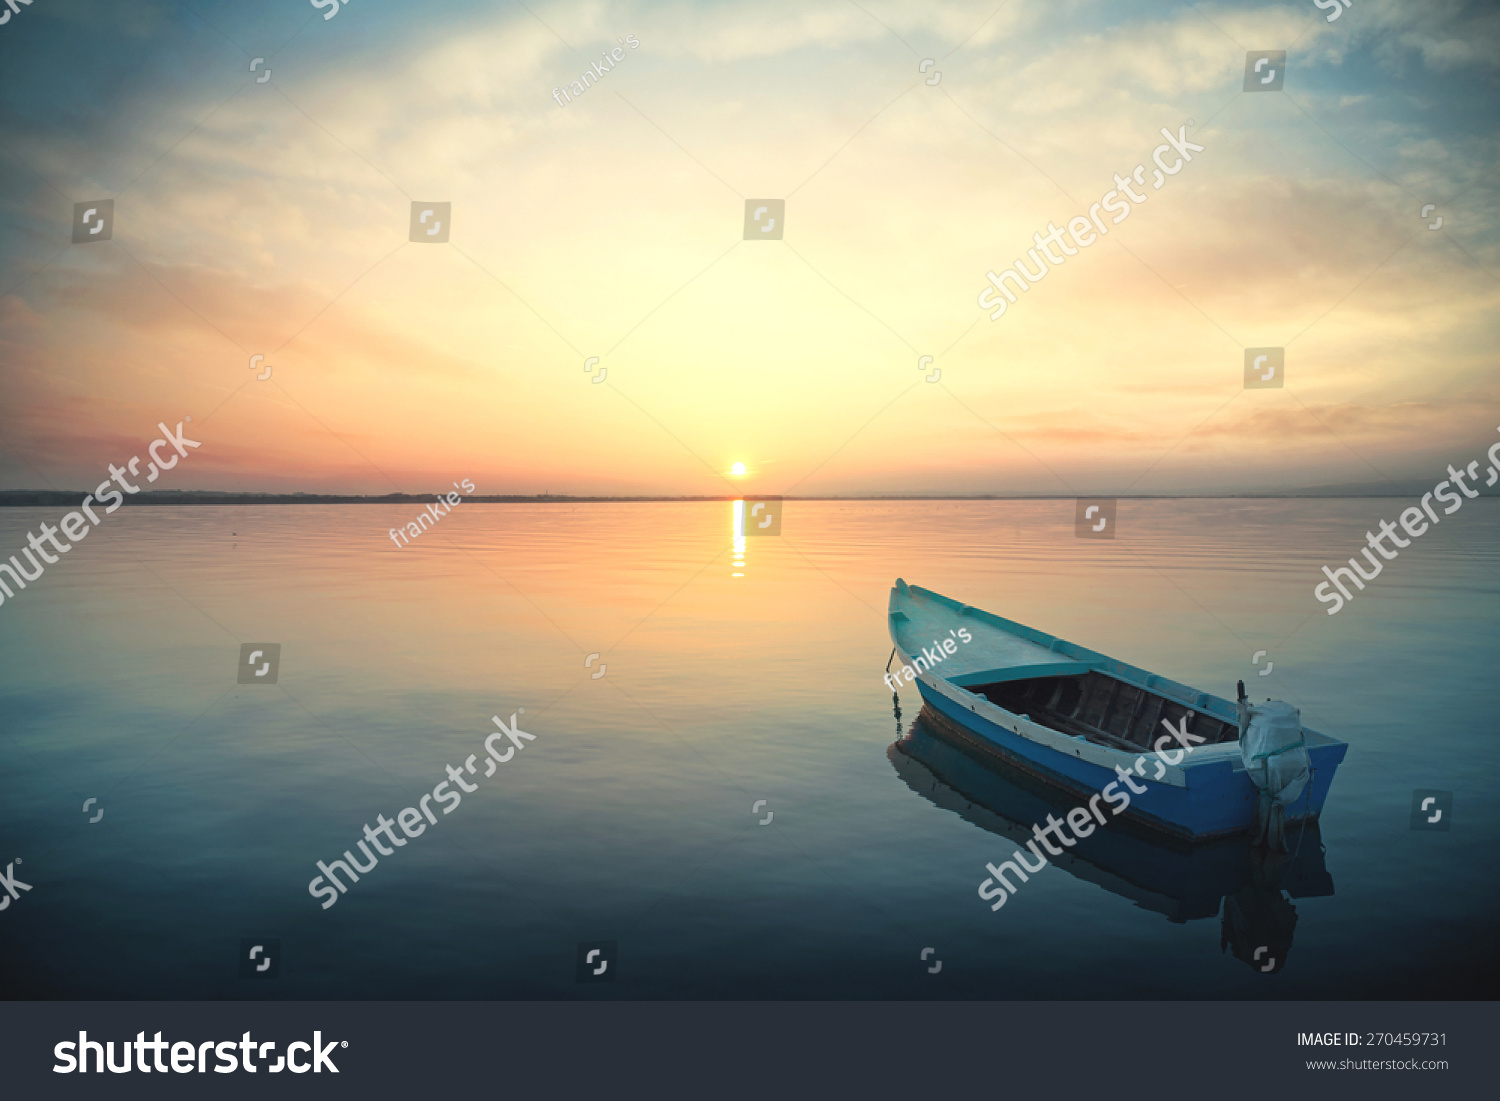 Canoe floating on the calm water under amazing sunset #270459731